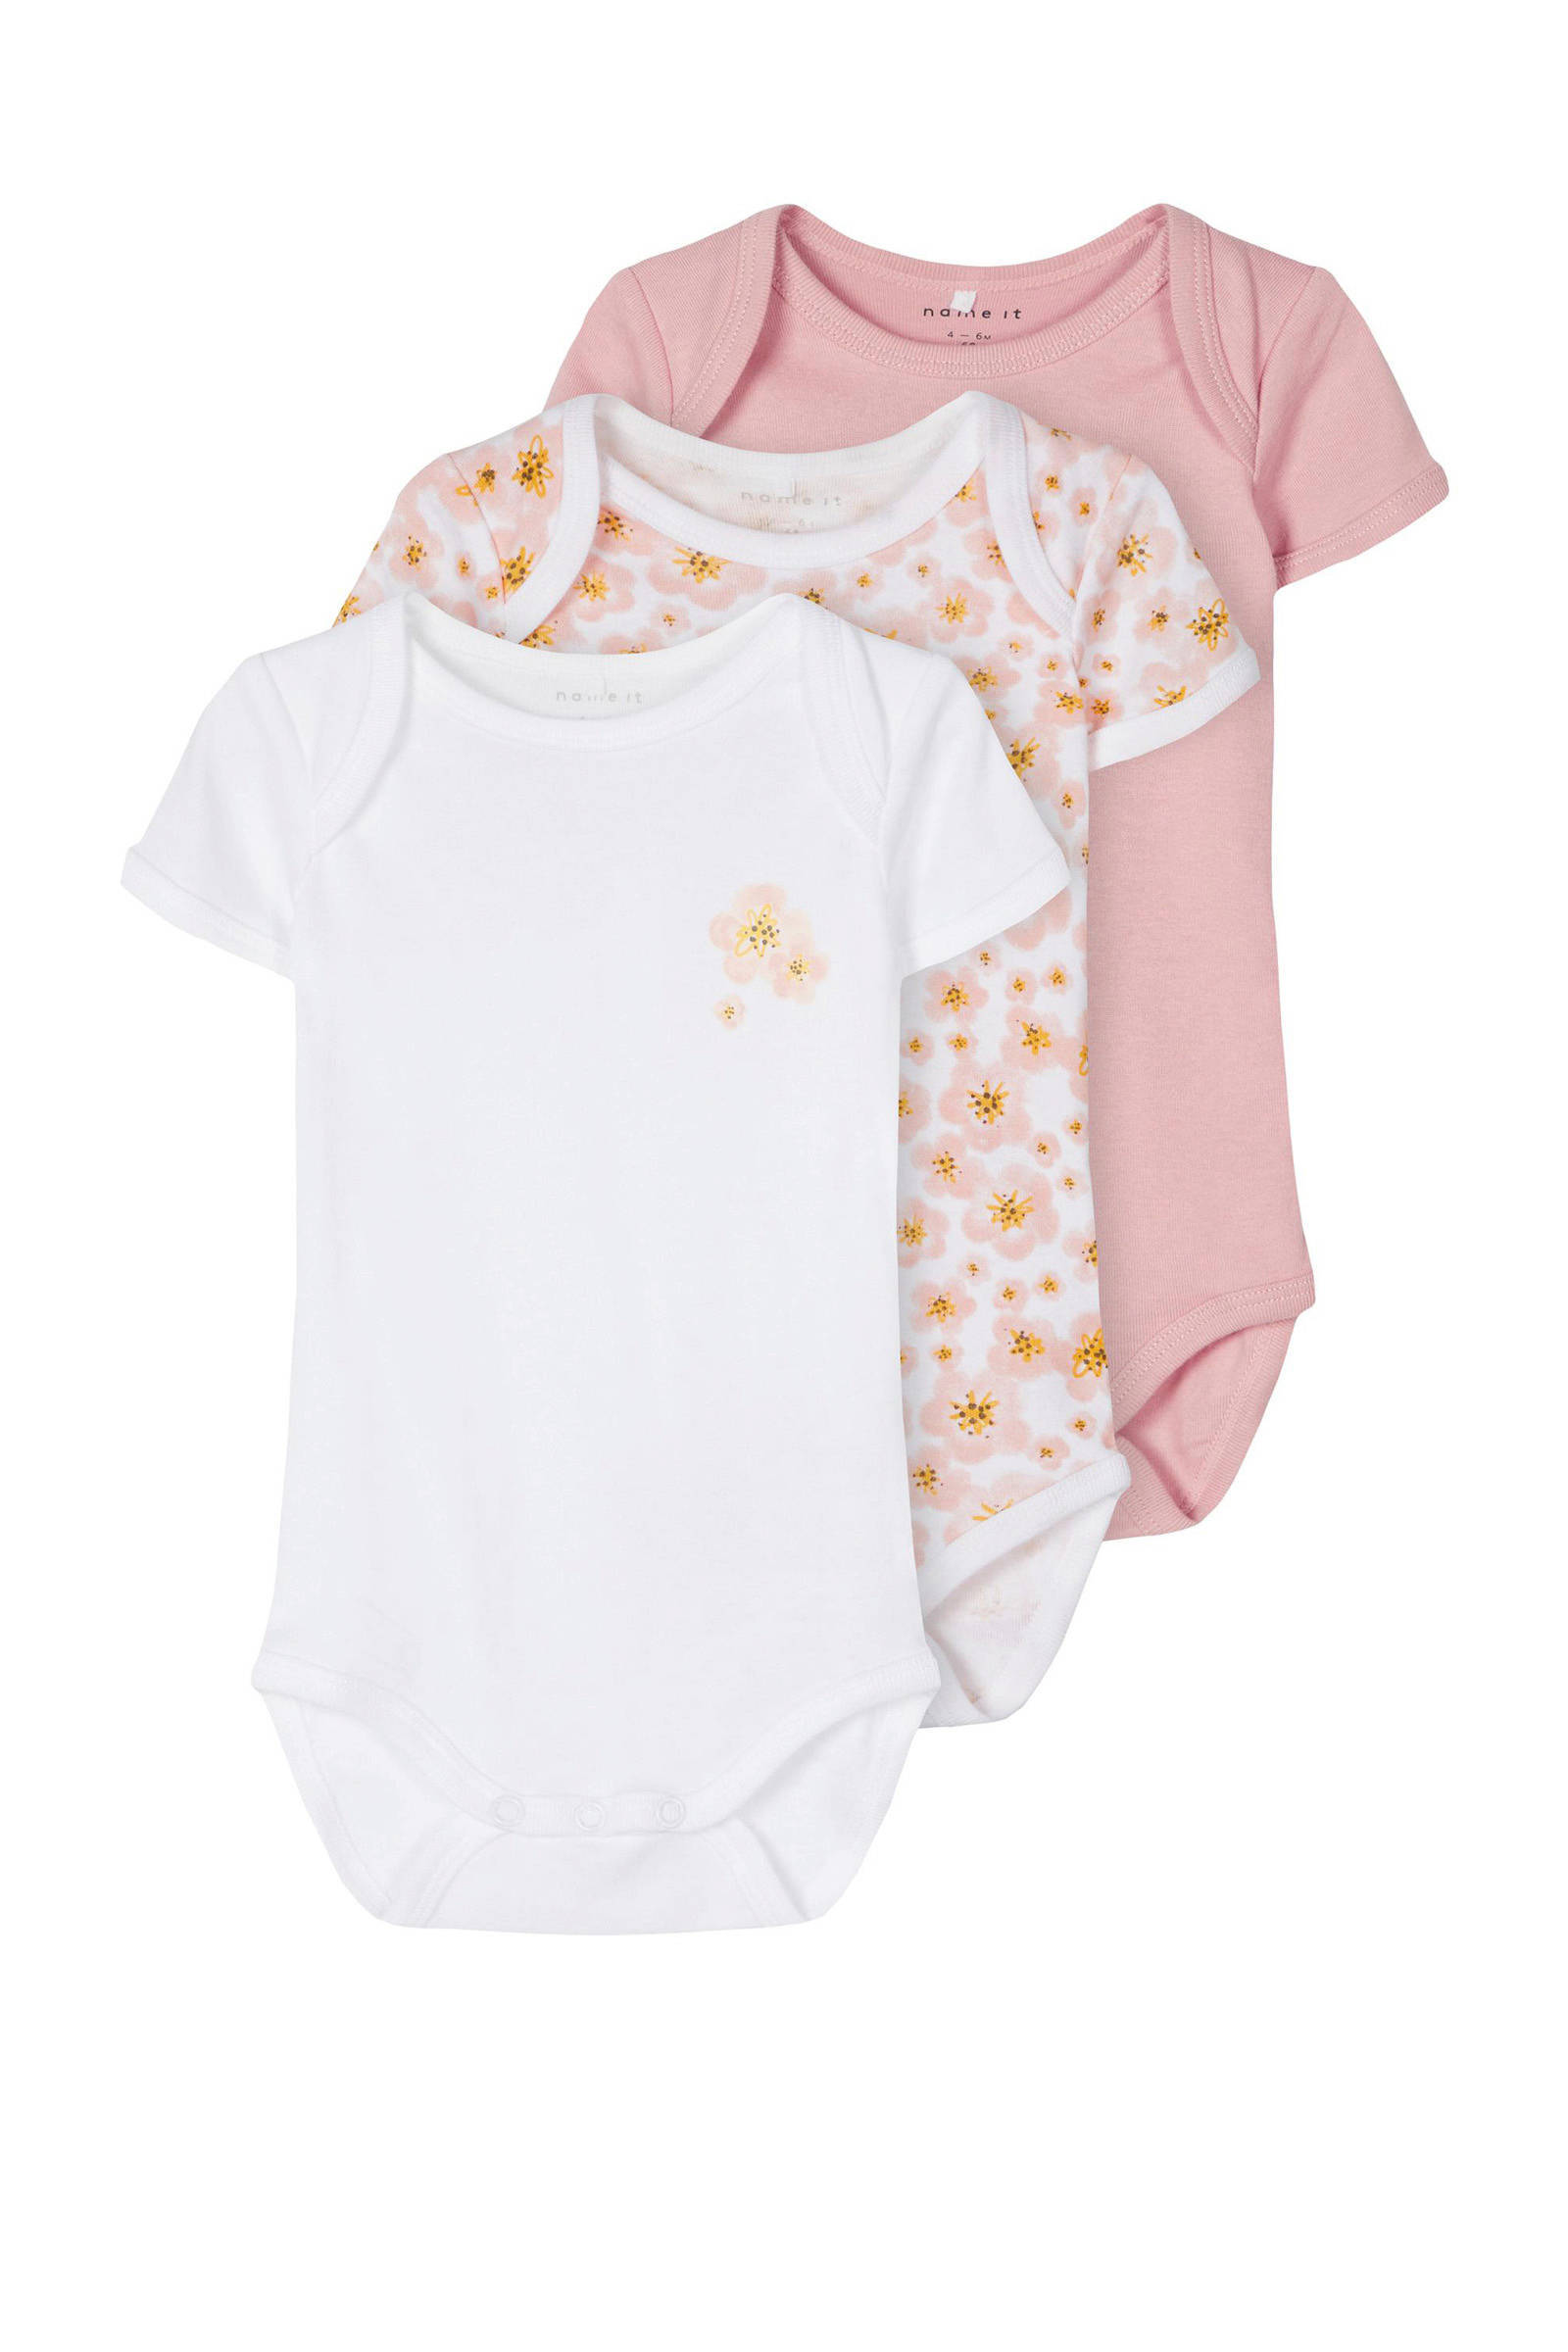 Newborn baby romper wehkamp Kleding Outfit sets Boxpakjes set van 3 roze 